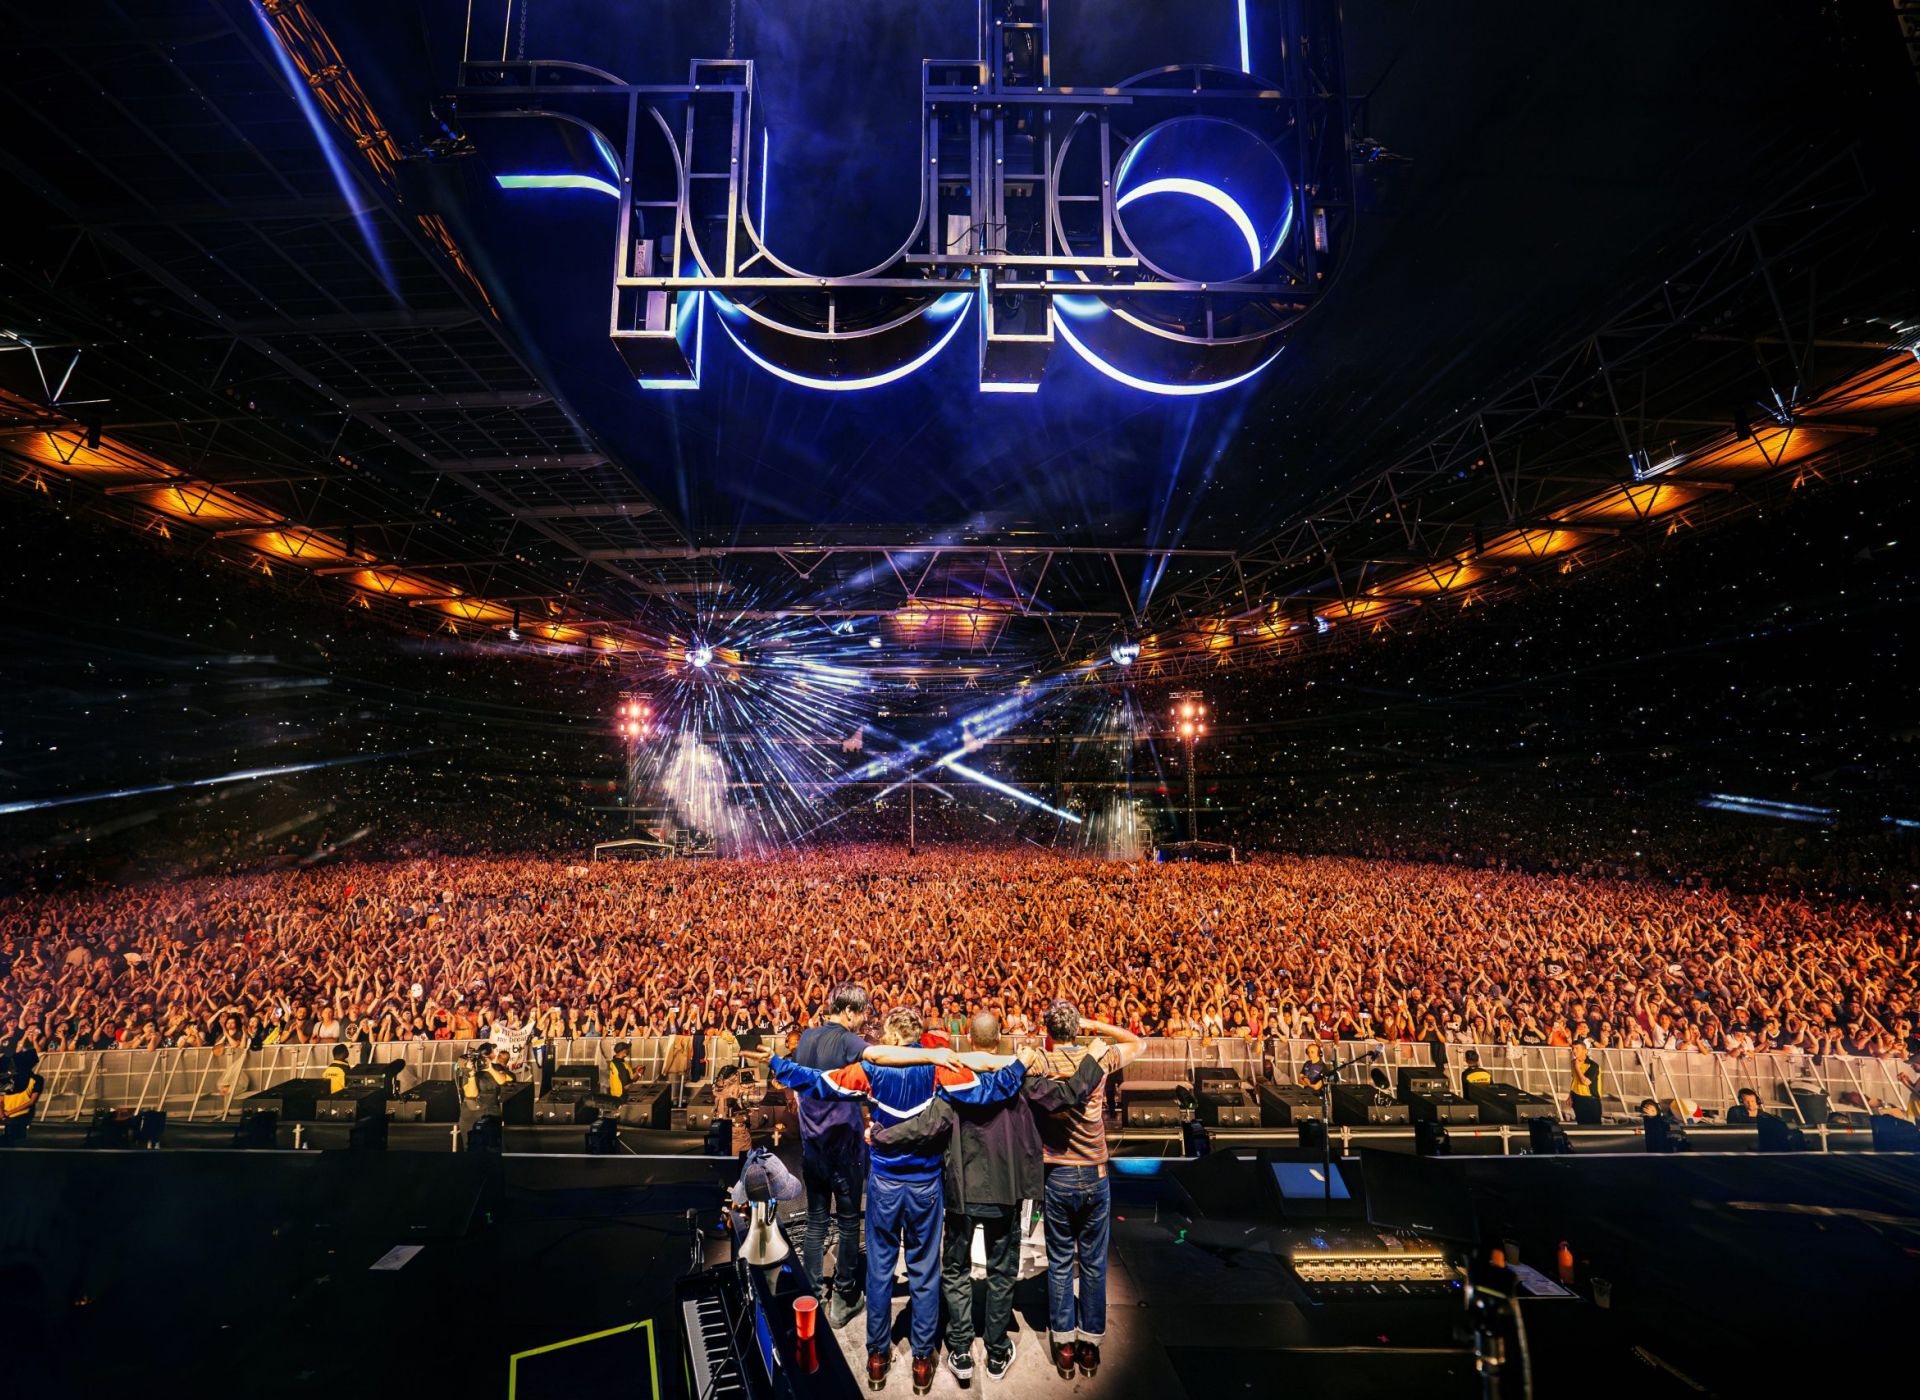 blur- Live At Wembley Stadium- The Album out now